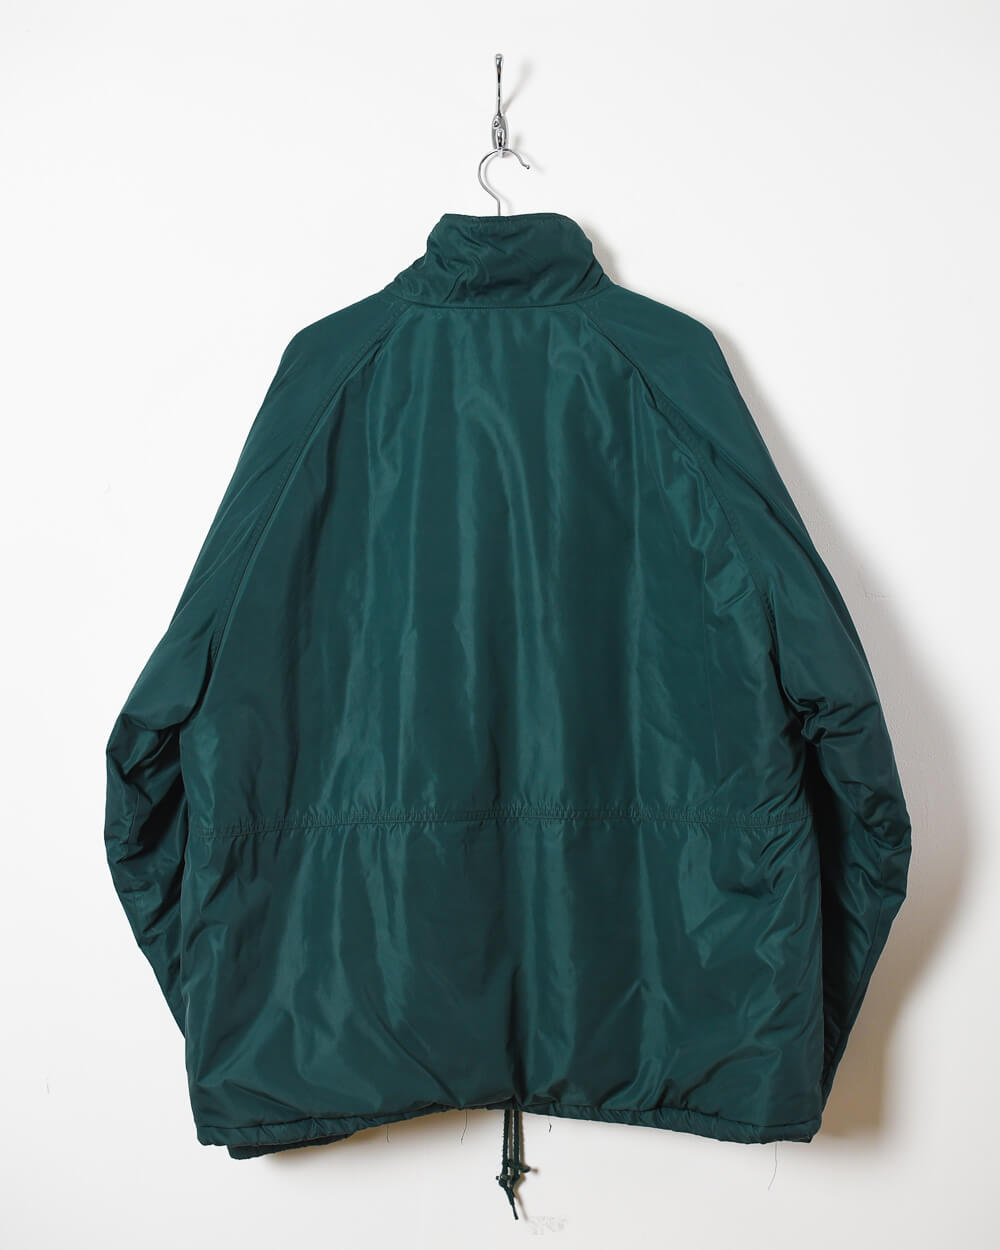 Green Adidas Winter Coat - X-Large